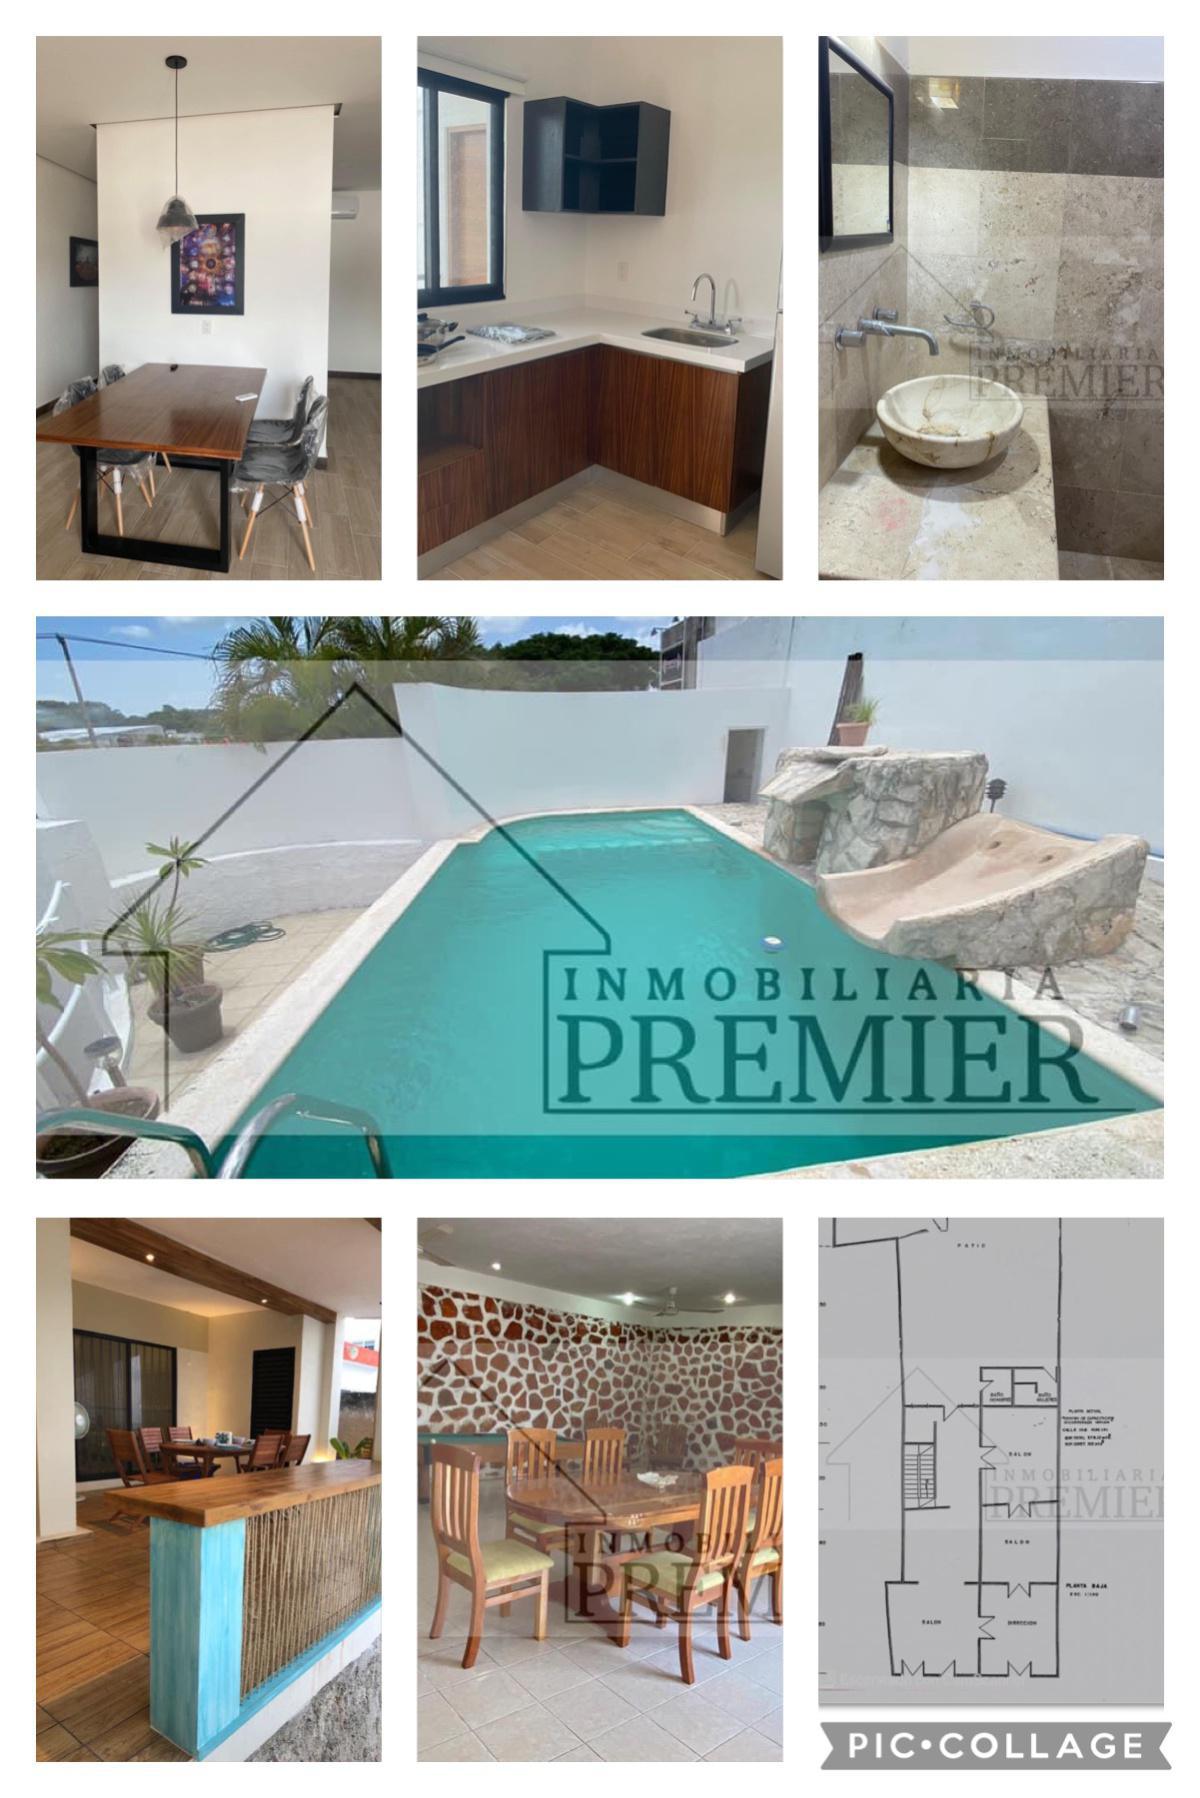 Premier Inmobiliaria - Campeche